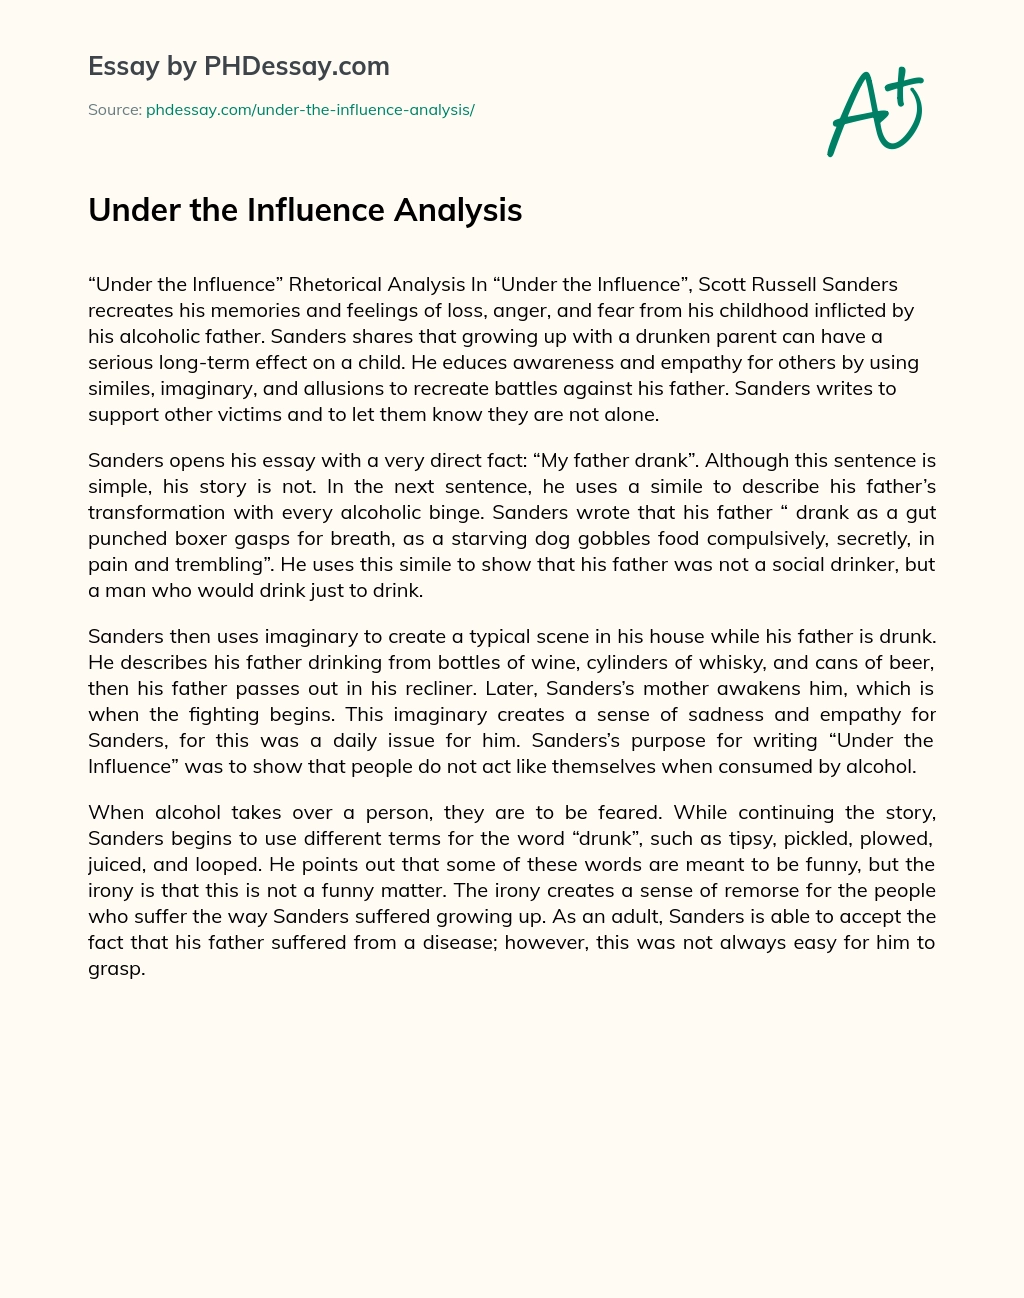 Under the Influence Analysis essay